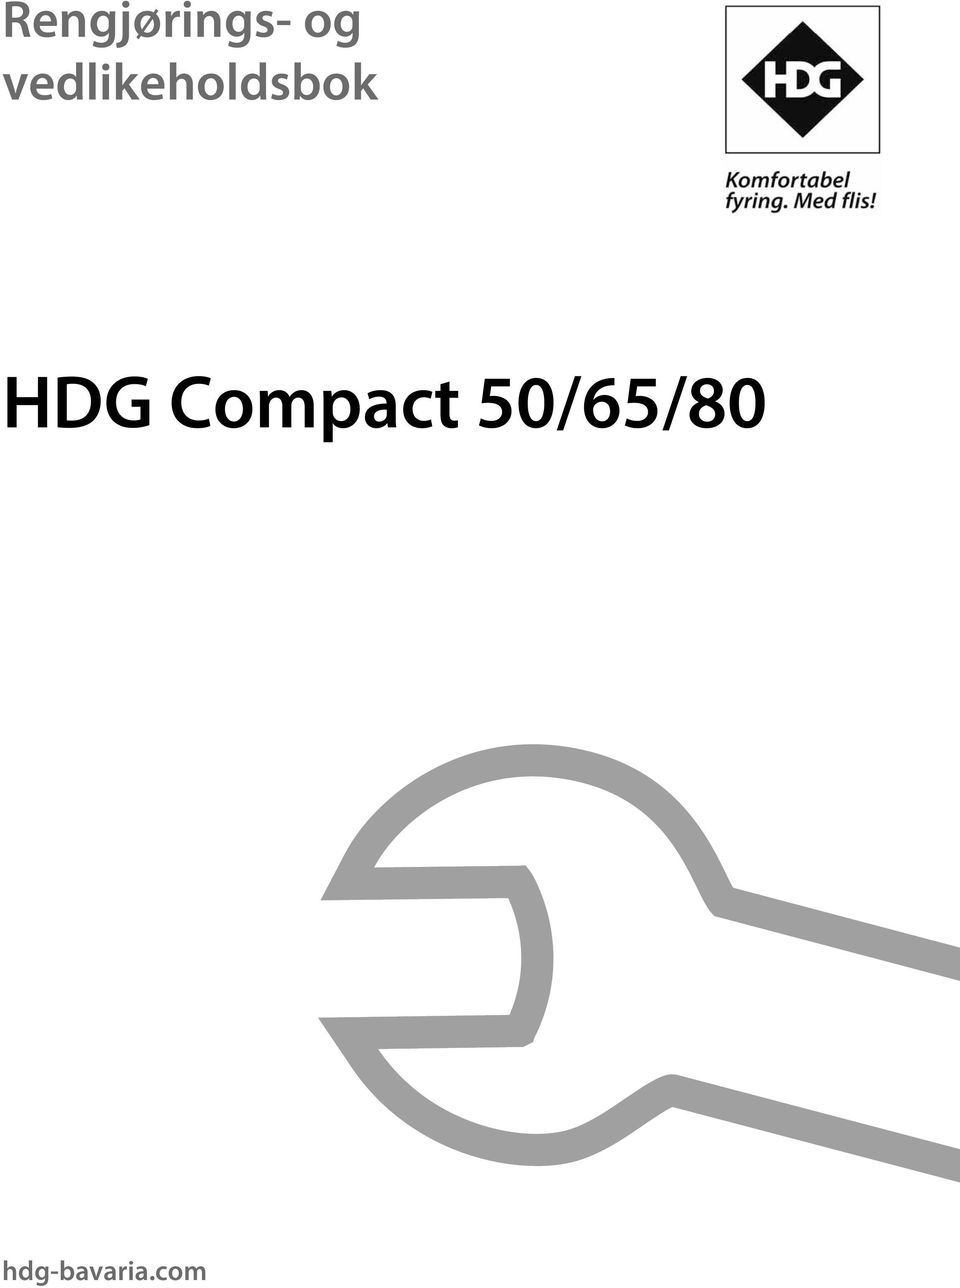 HDG Compact